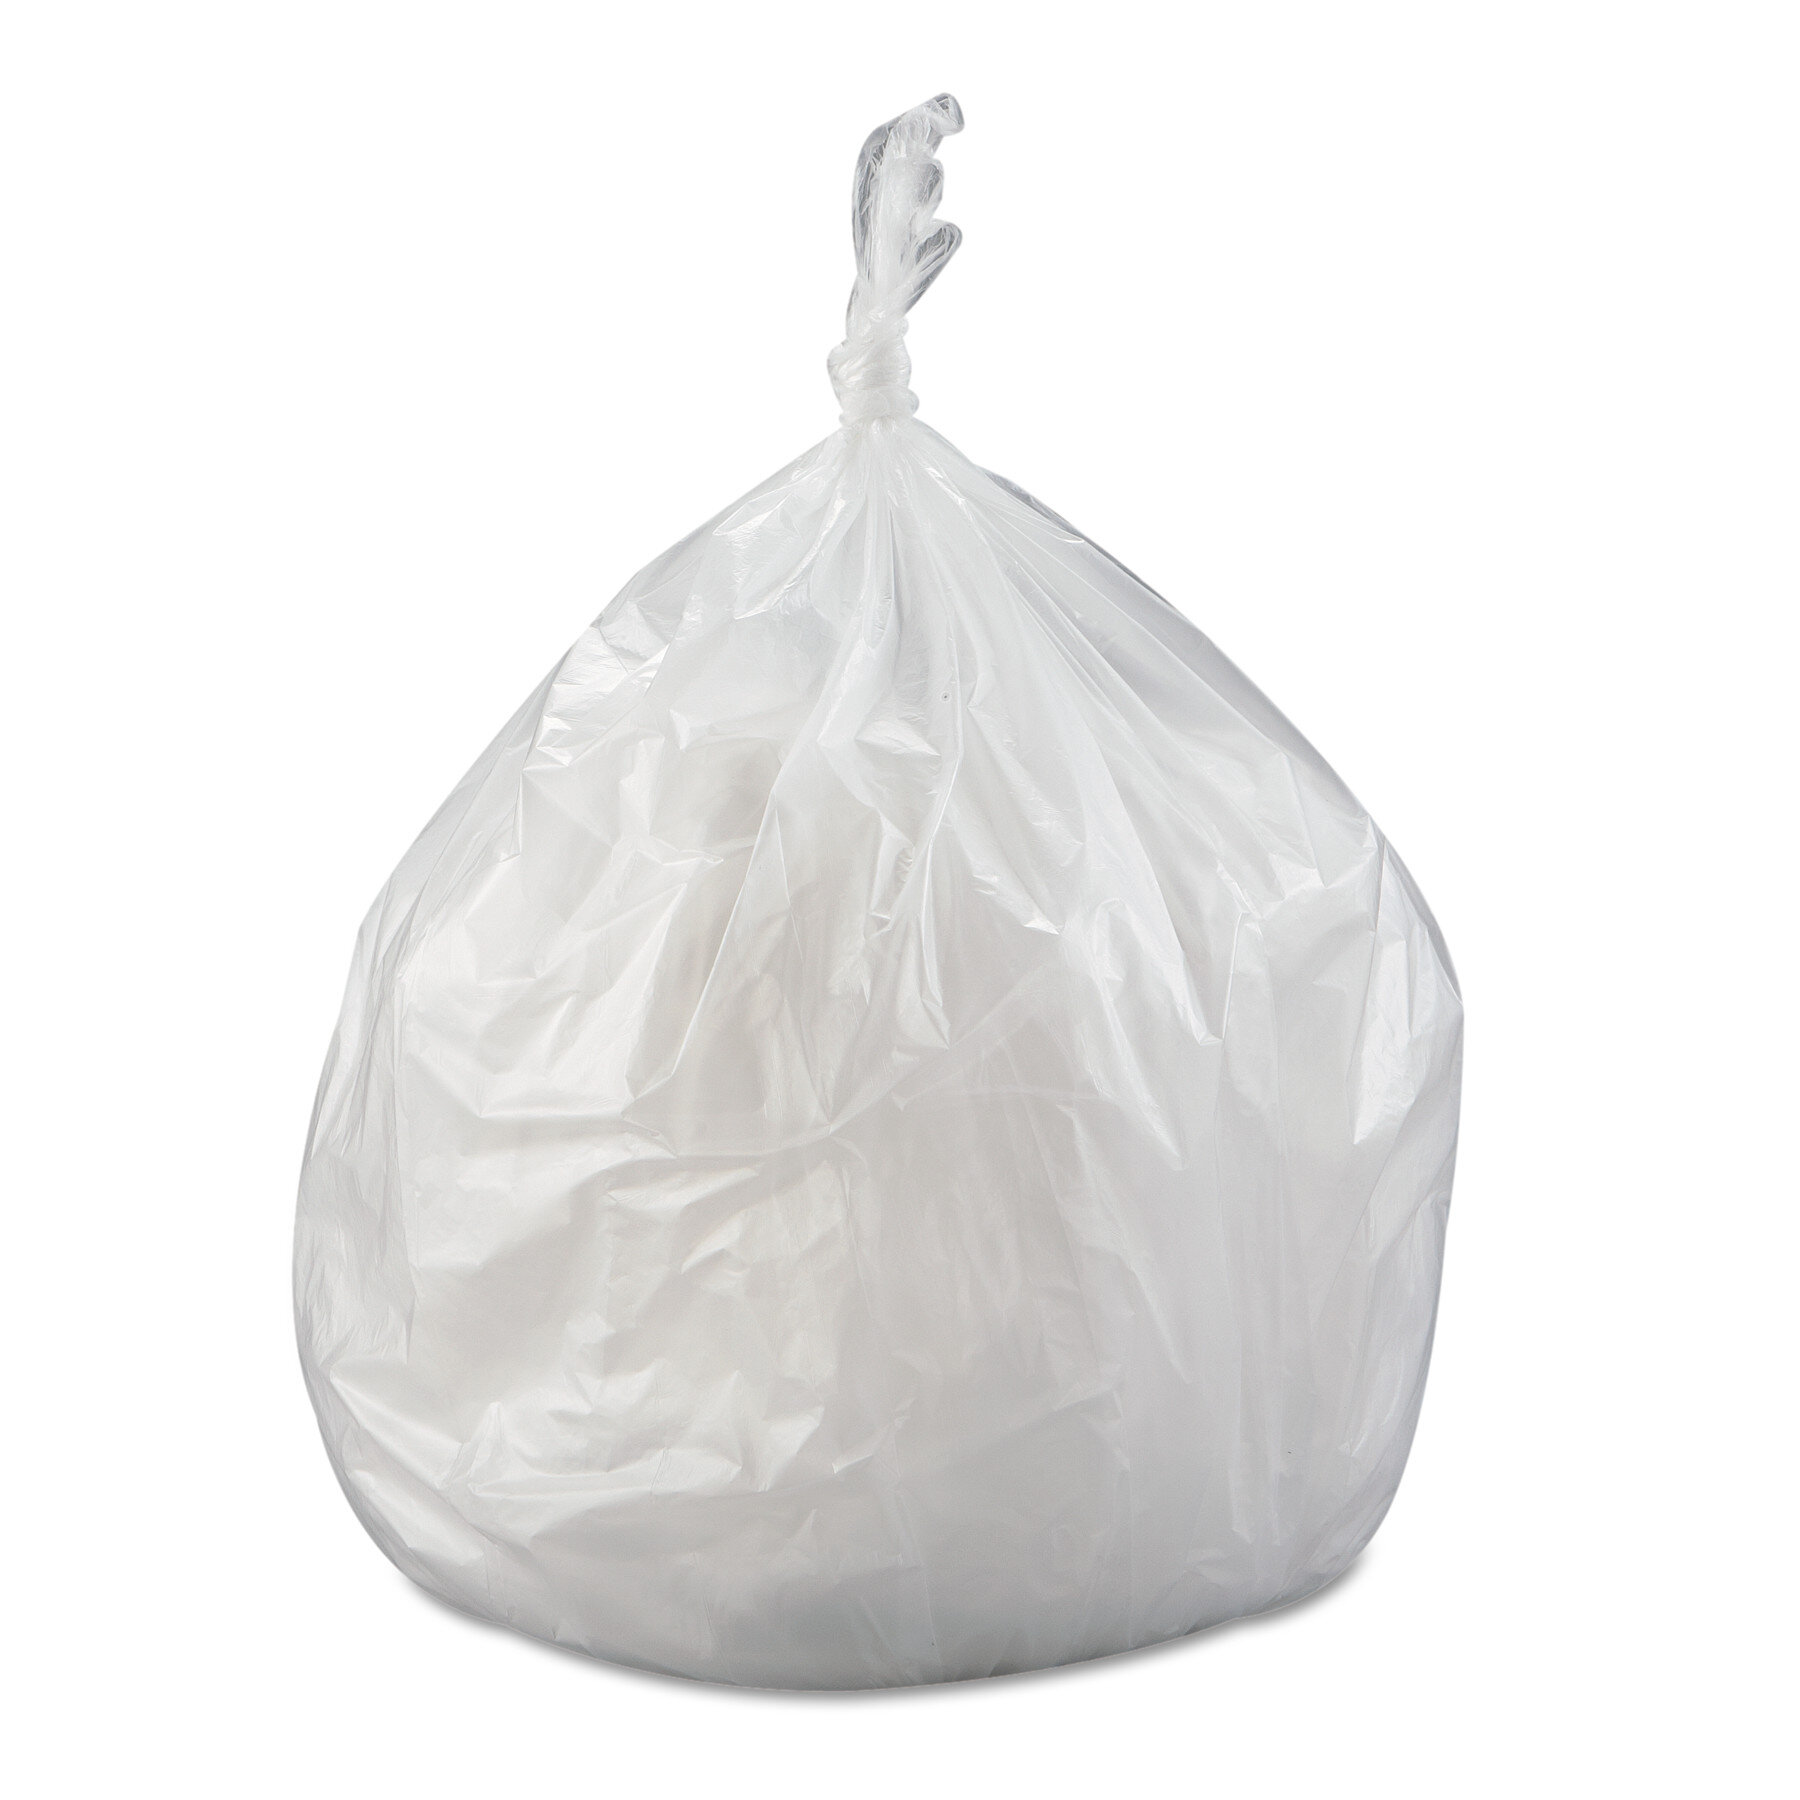 Topteng Polyethylene Trash Bags - 1 Count